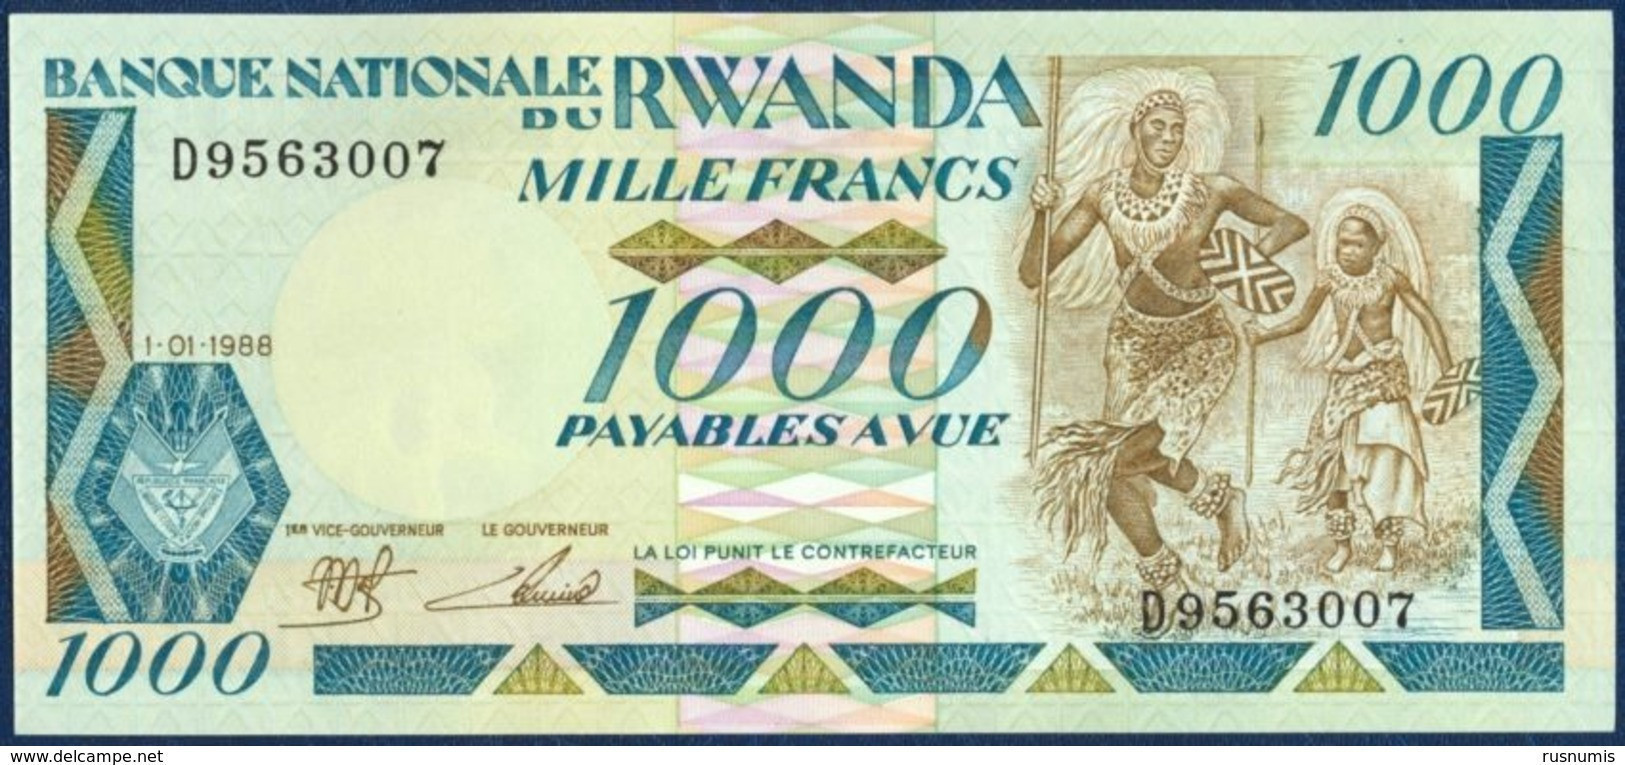 RWANDA 1000 FRANCS P-21a Dancers - Wildlife Gorilla With Baby, Lake 1988 UNC - Rwanda